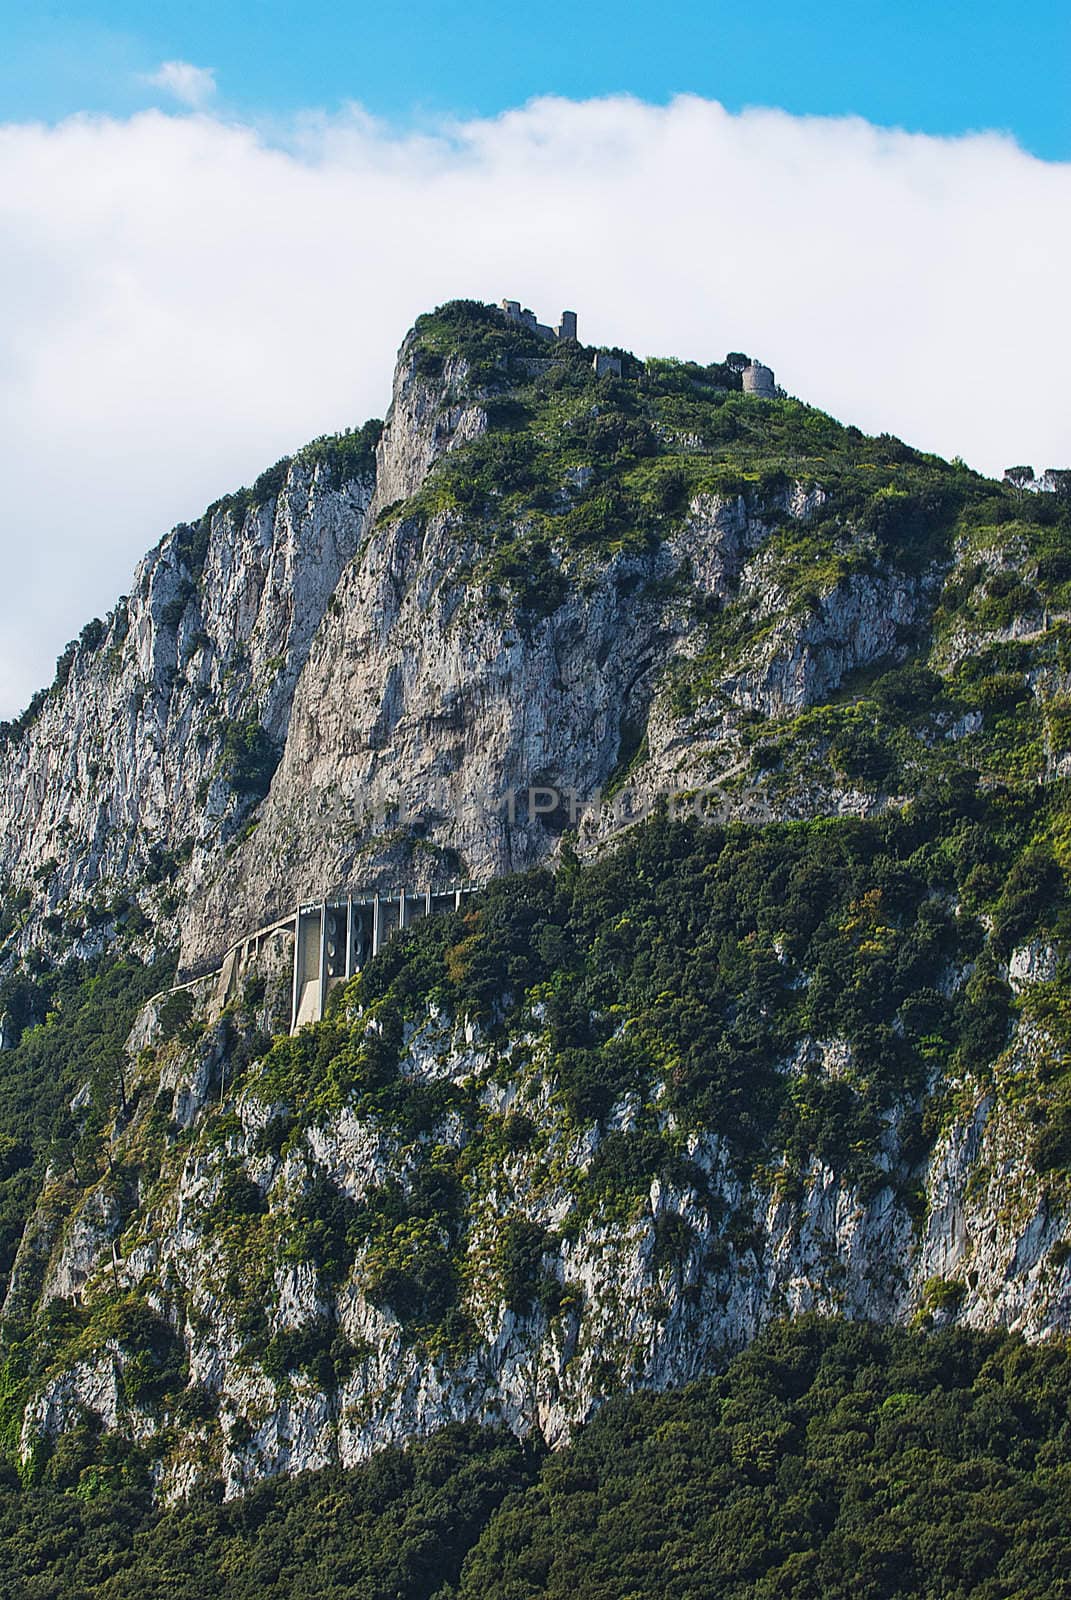 perilous bridge around rugged cliffs capri italy by itsrich